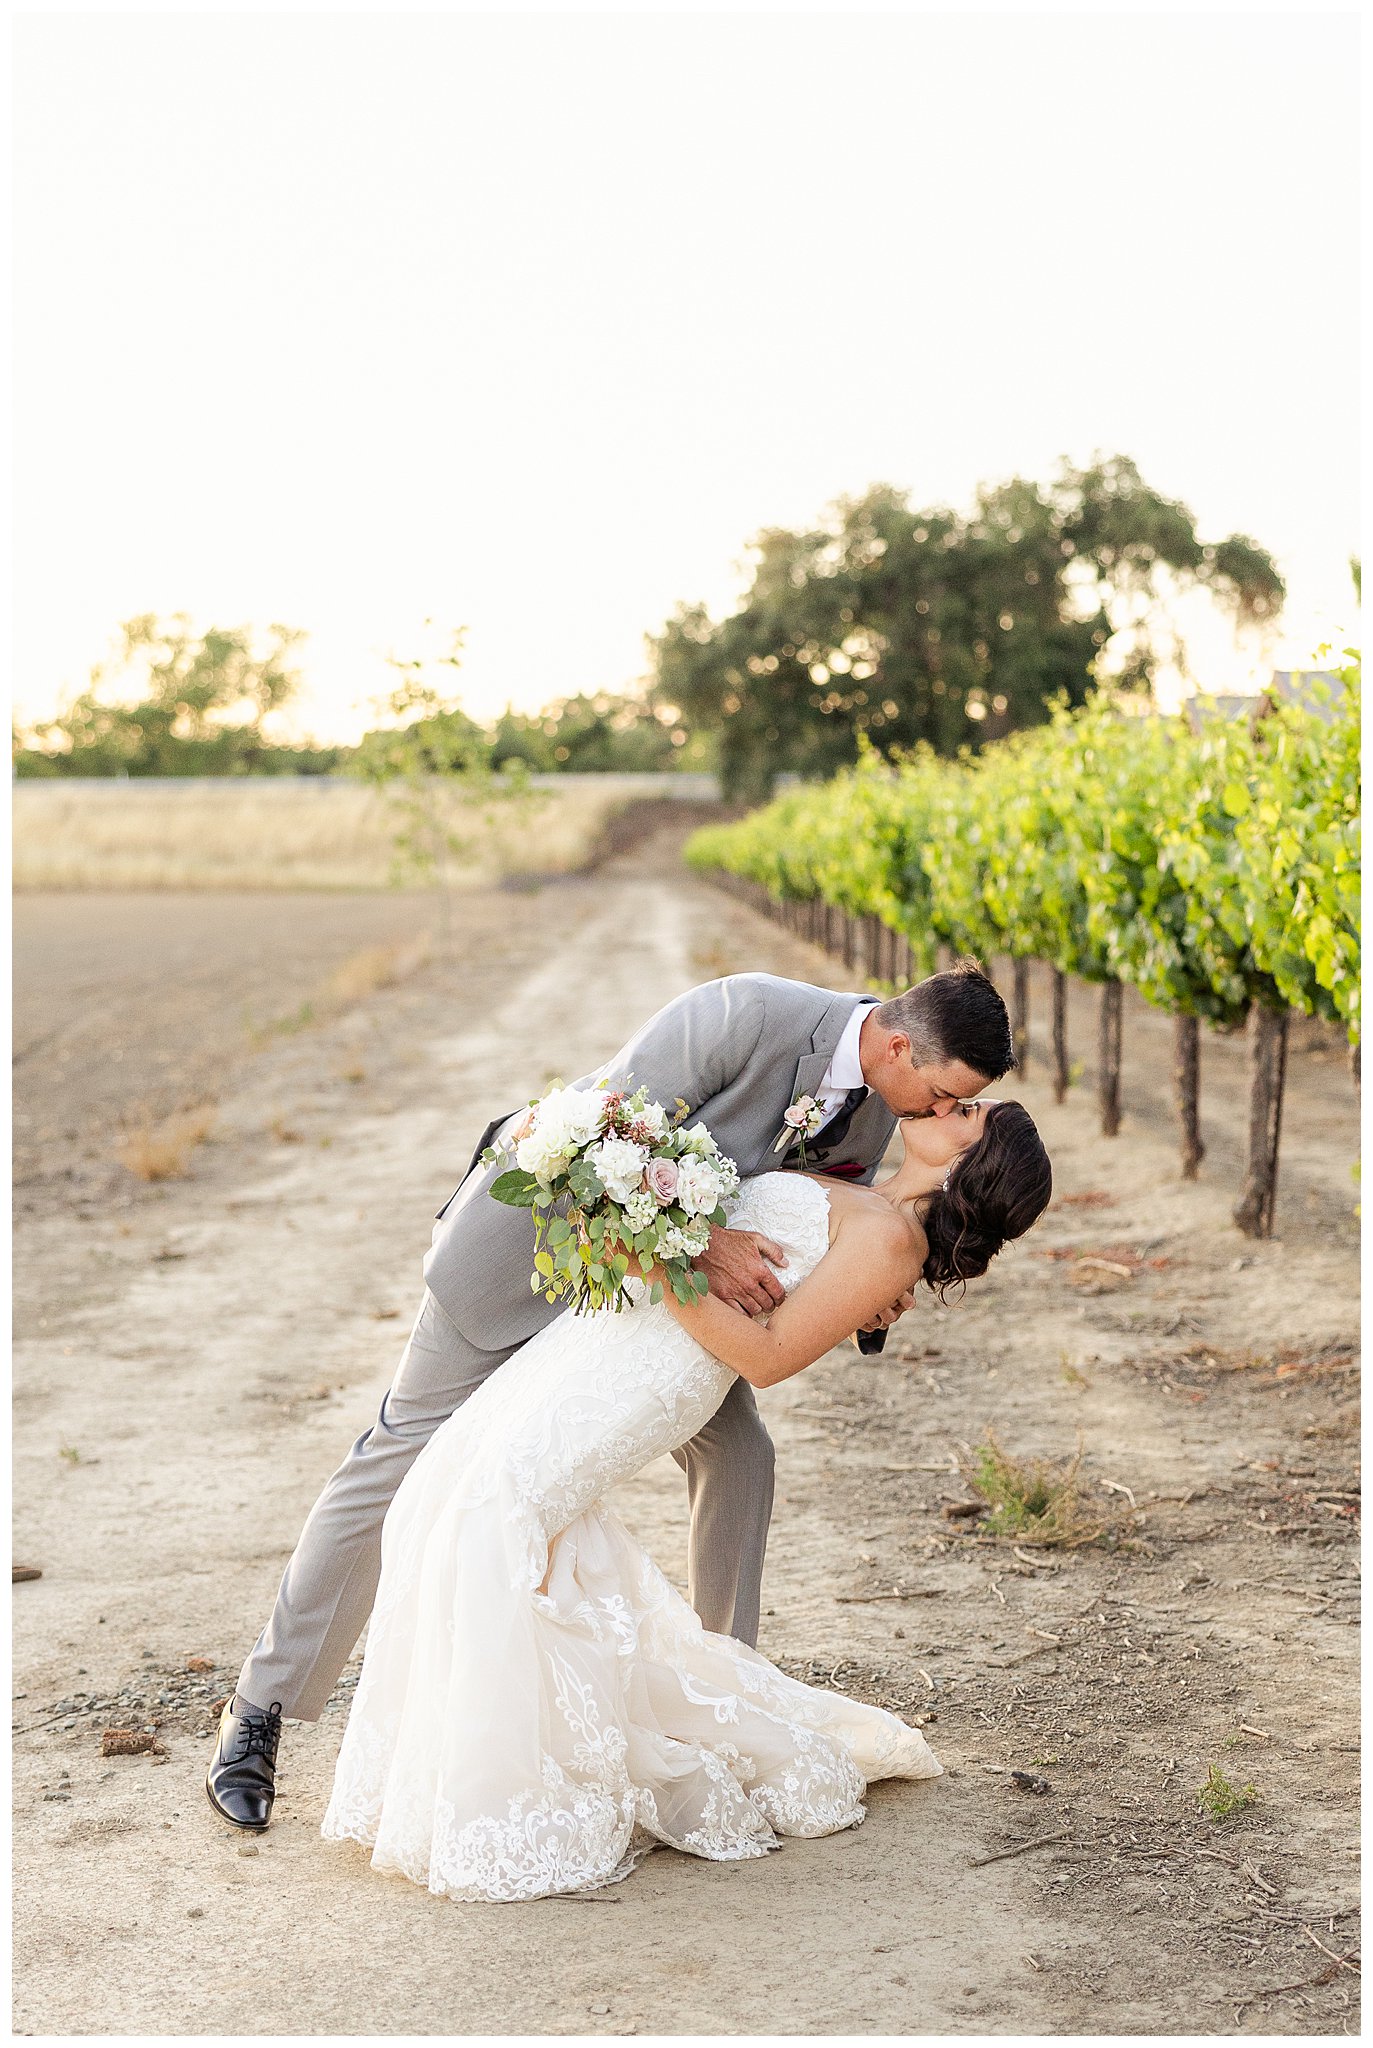 Scribner Bend Wedding Dip and Kiss in the Vineyard | Nicole + DJ